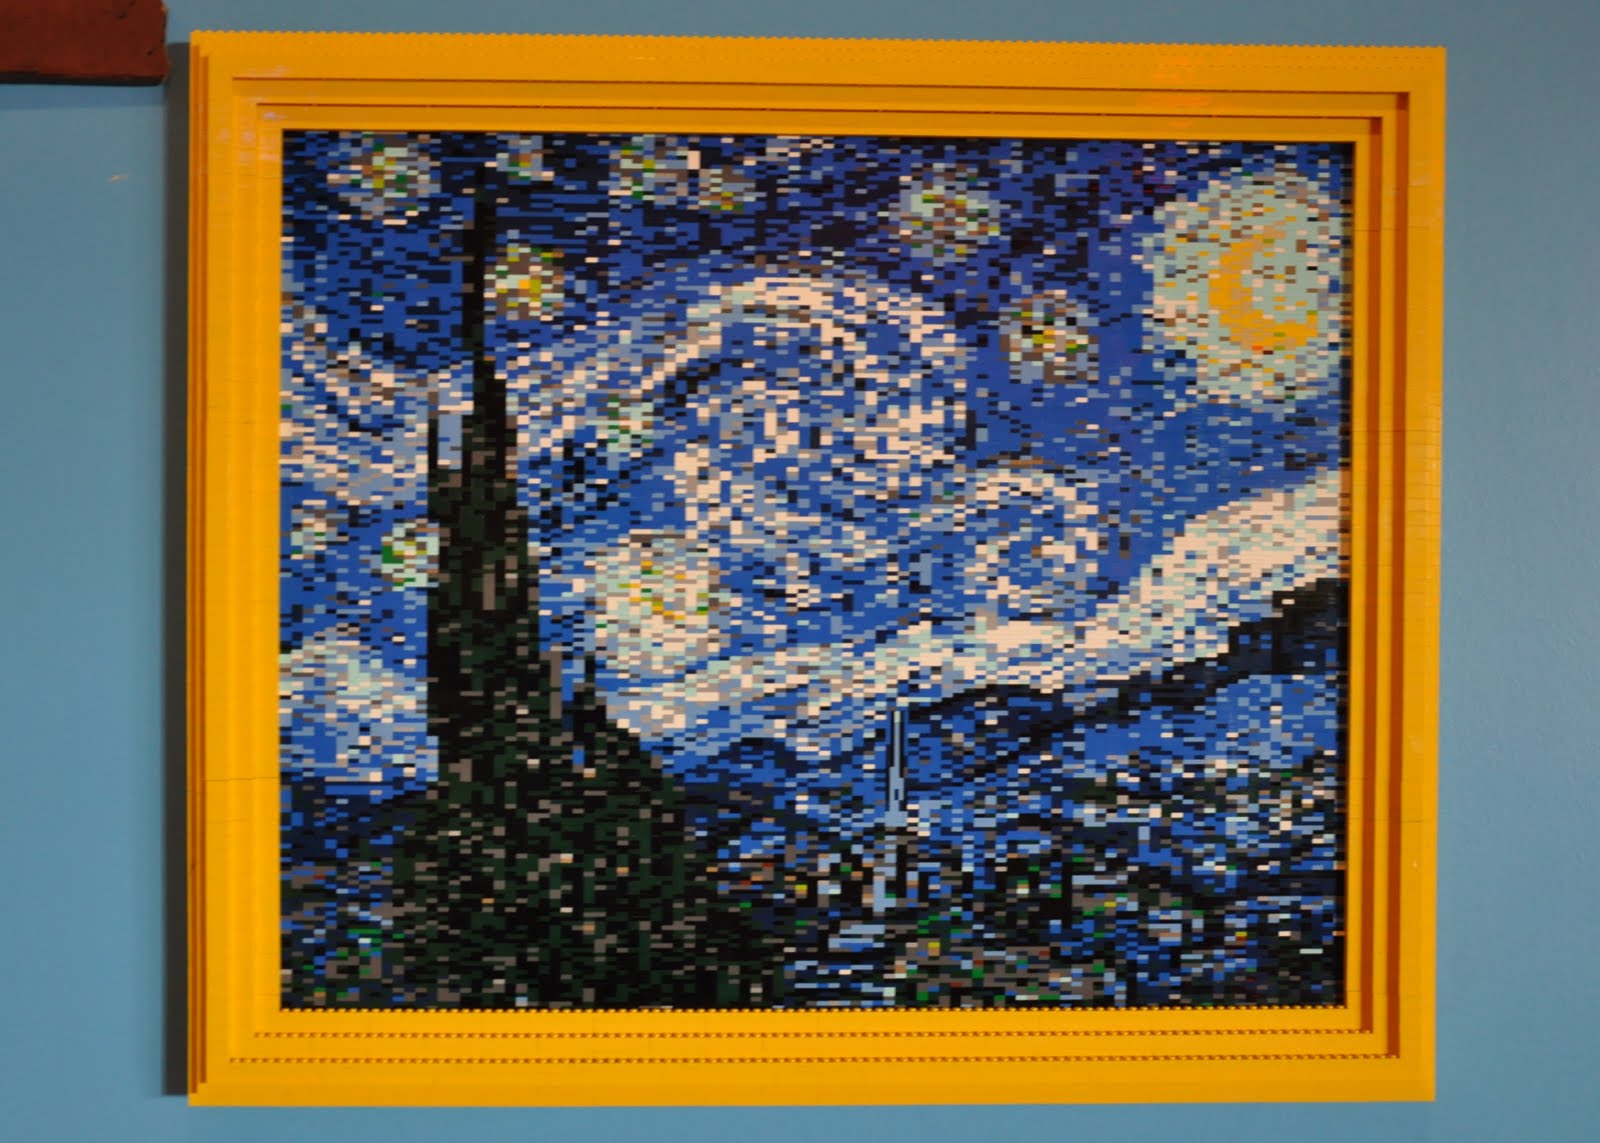 LEGO Artist Starry Night Mosaic